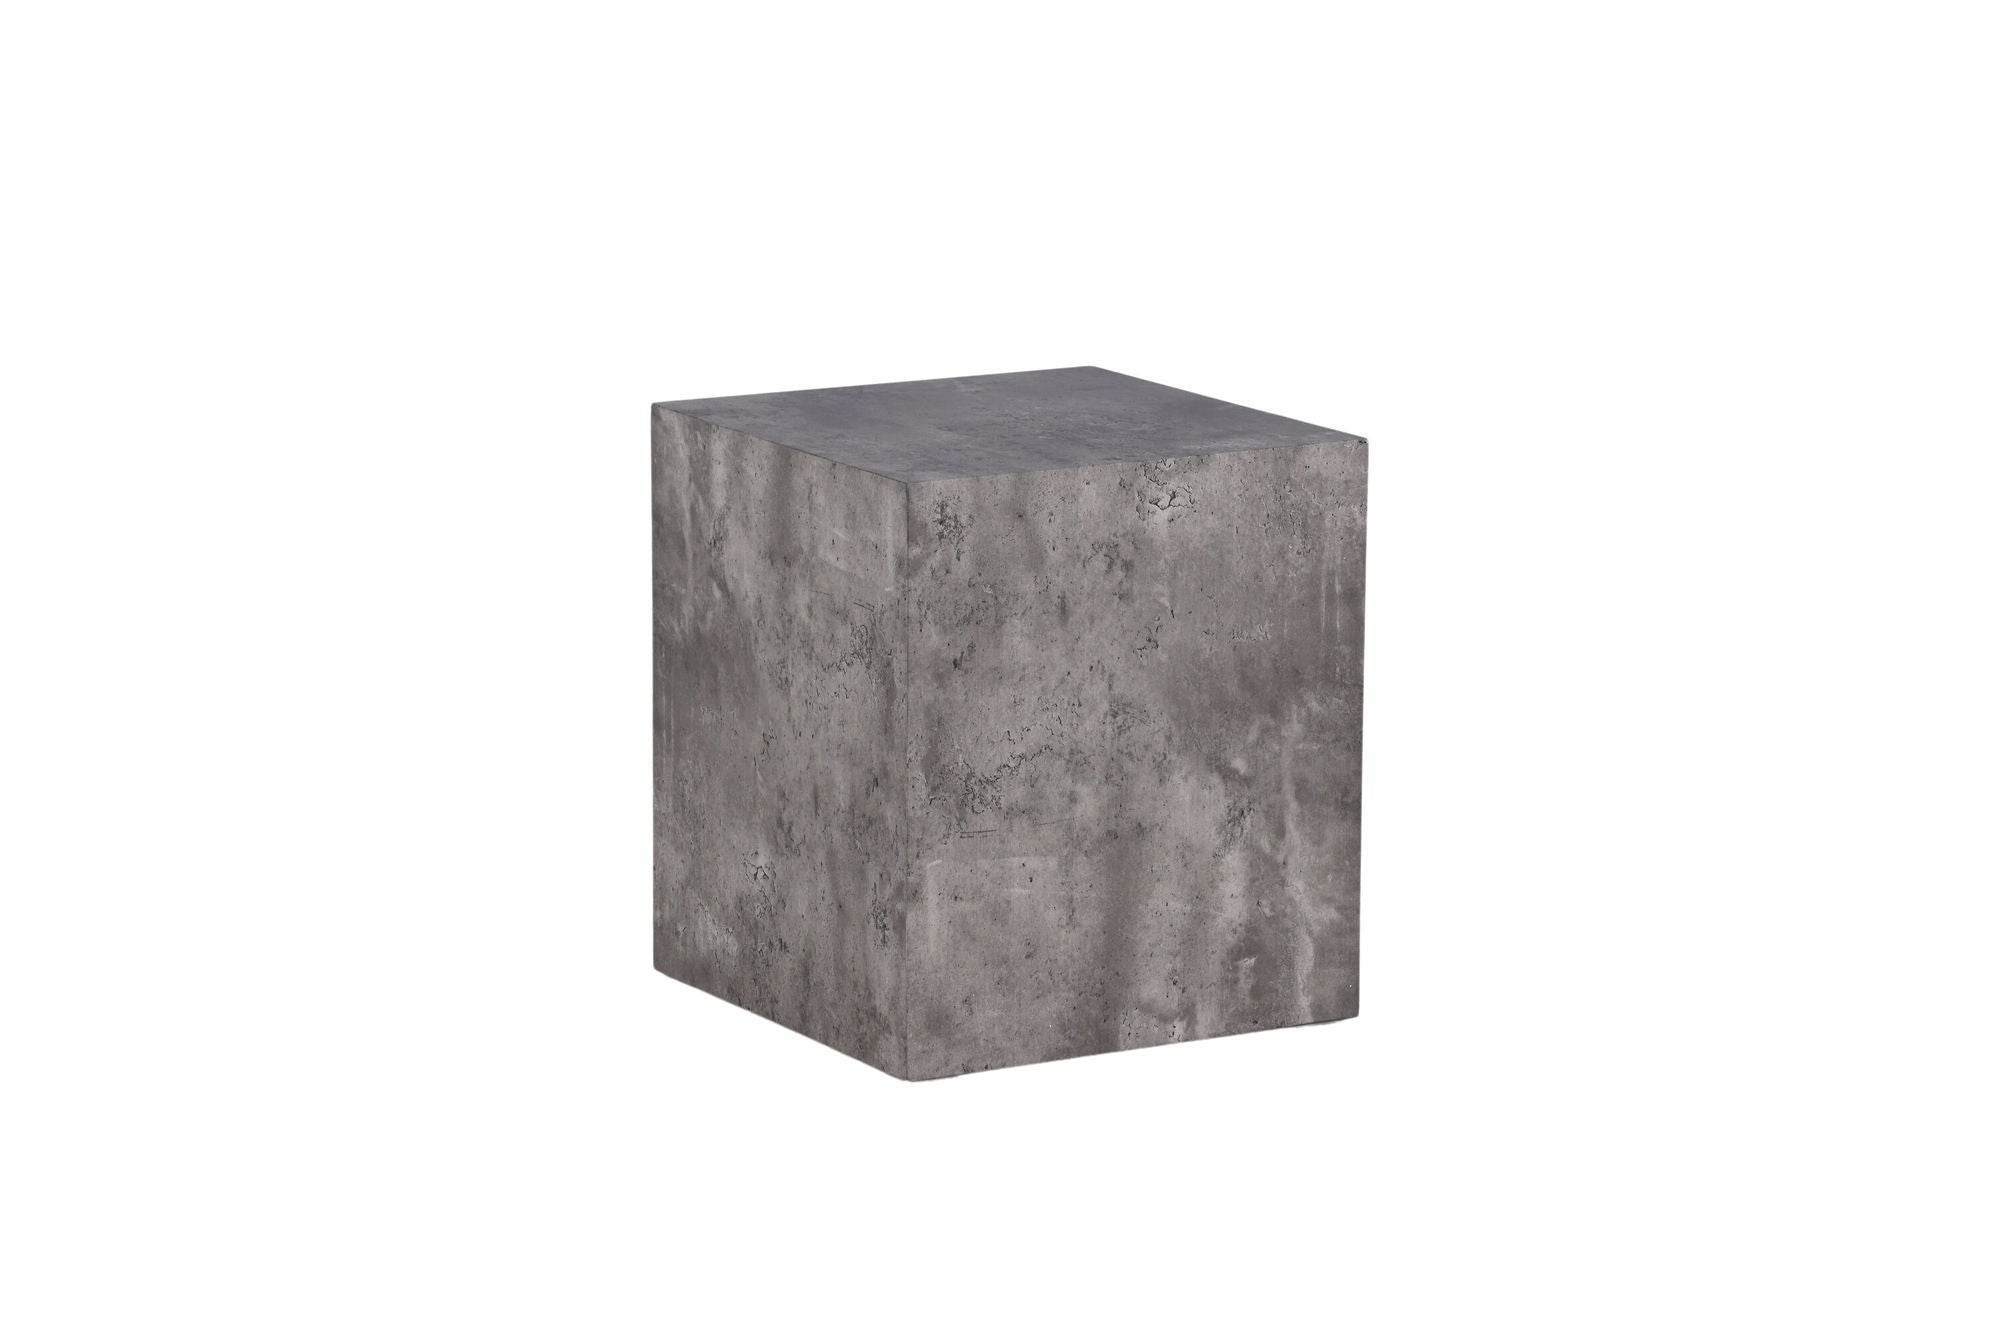 Mesa alta para sofá Venture Home York - MDF gris / aspecto mármol